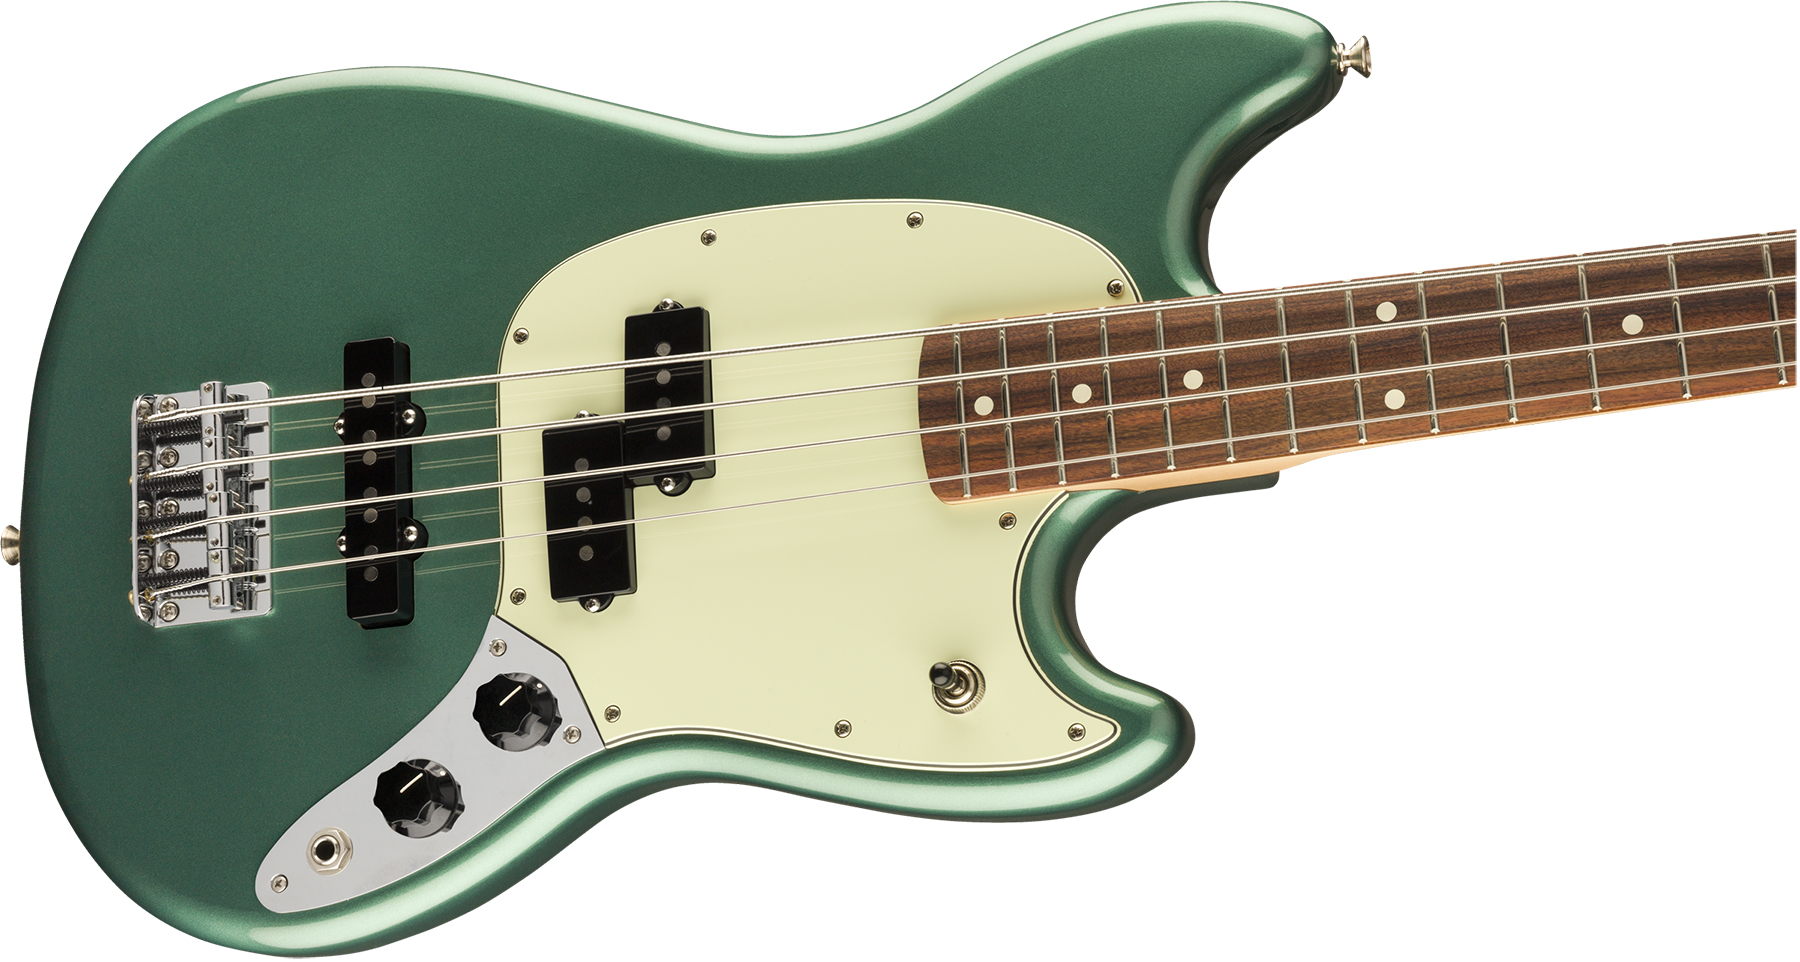 Fender Mustang Bass Pj Player Ltd Mex Pf - Sherwood Green Metallic - Short scale elektrische bas - Variation 2